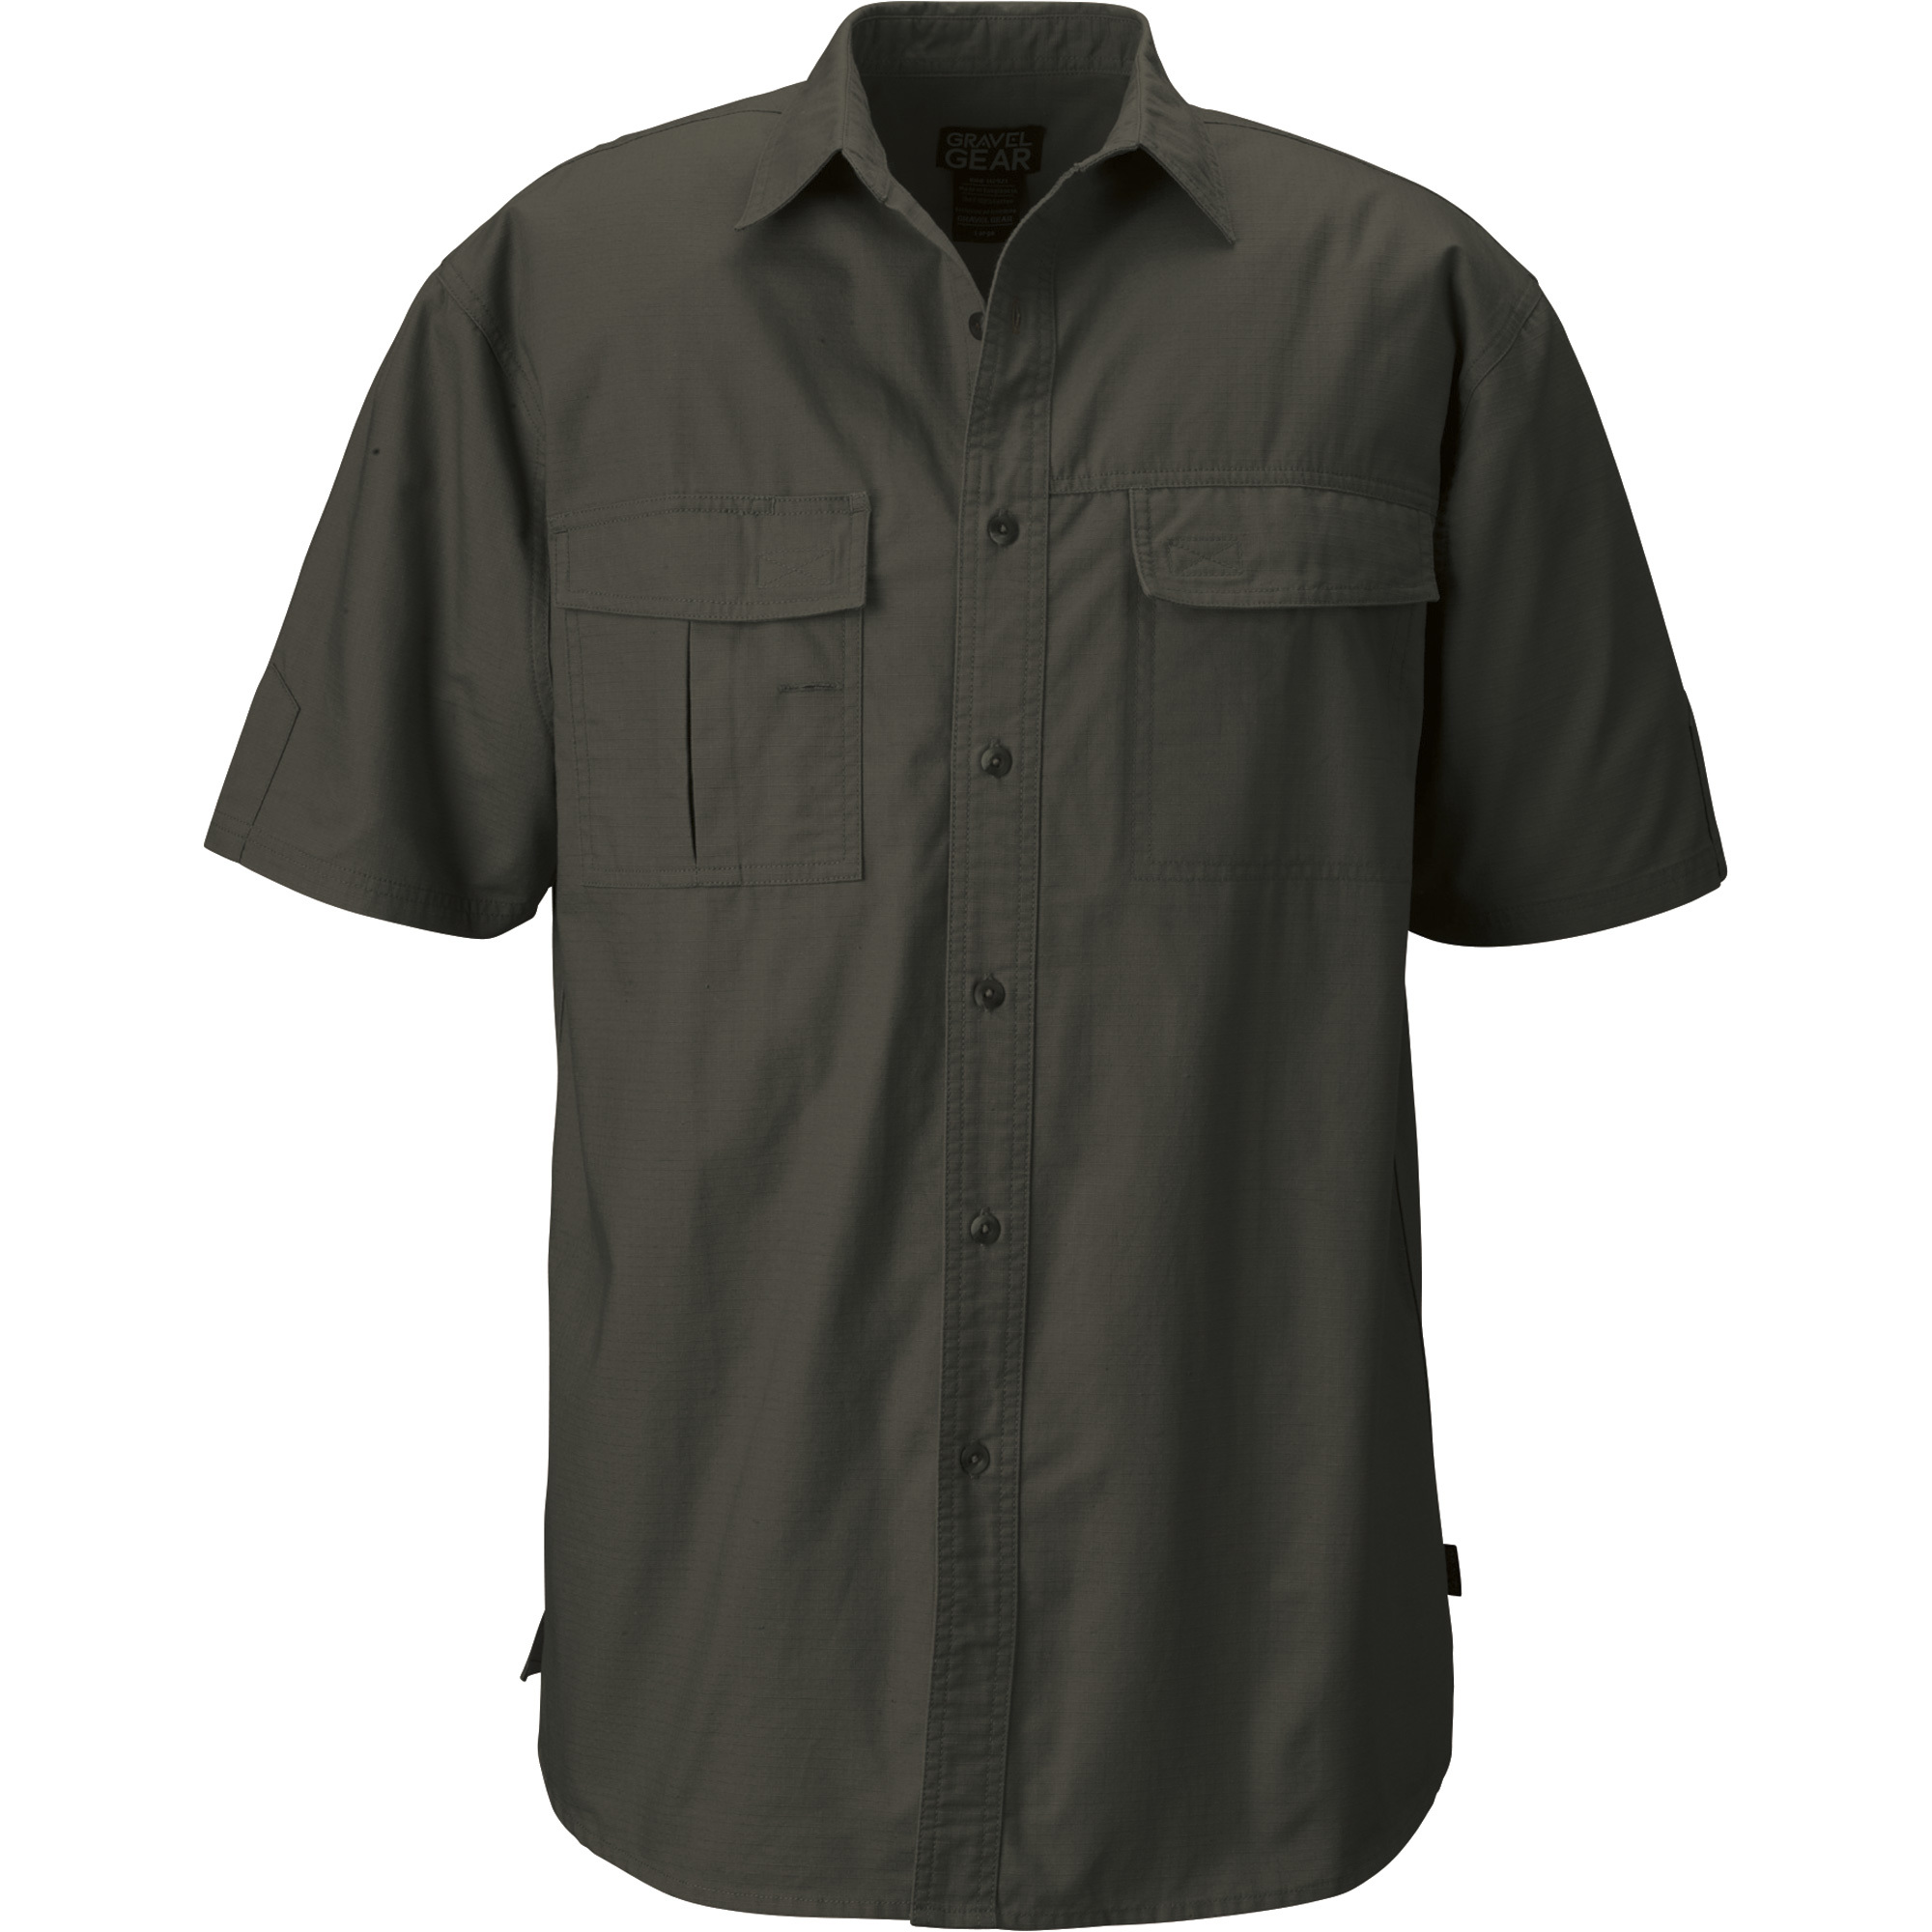 Gravel Gear Men's Cotton Ripstop Short Sleeve Work Shirt with Teflon Fabric Protector â Moss, Medium